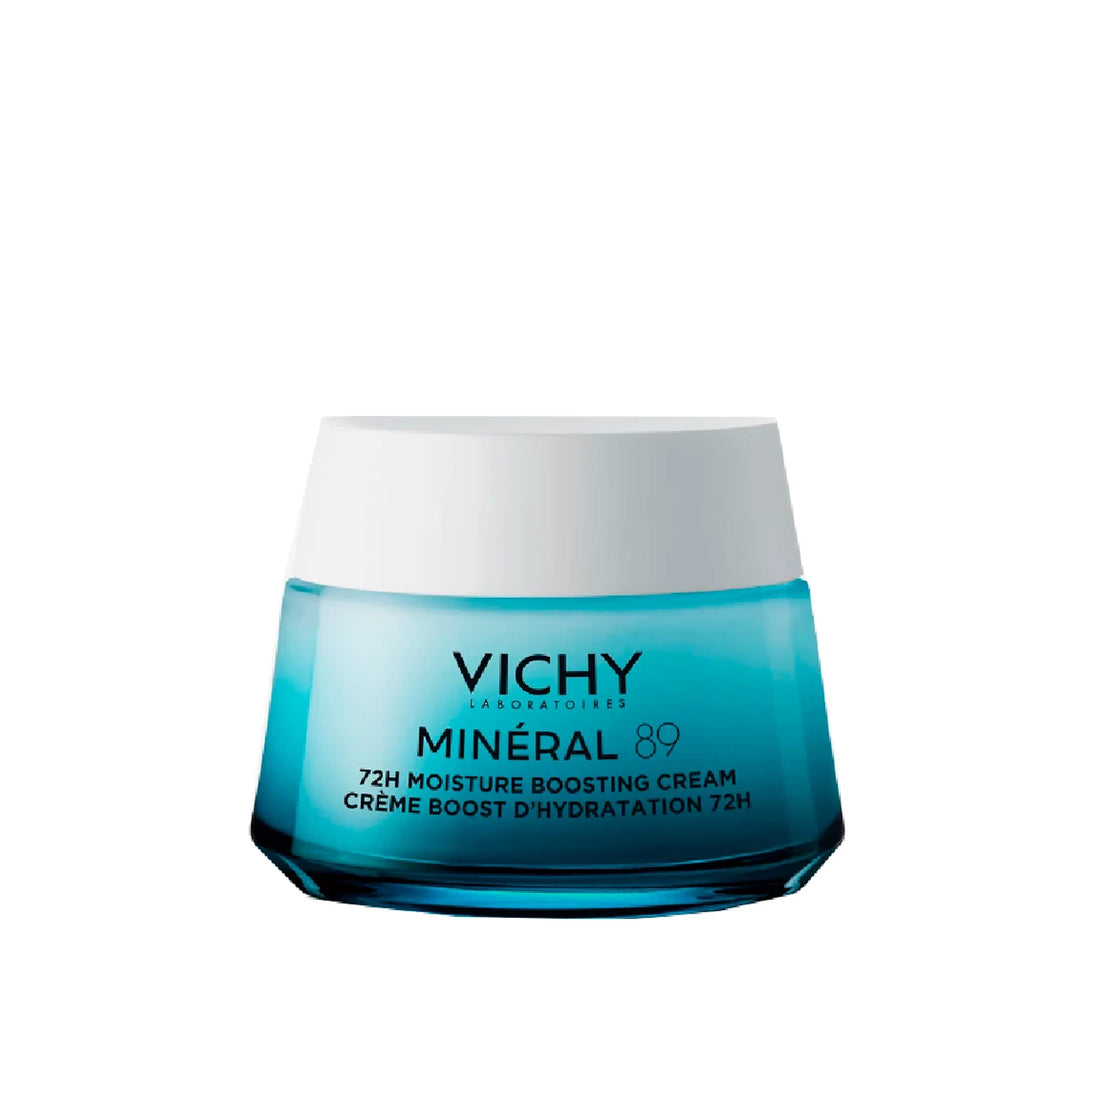 Vichy Mineral 89 Moisturizing Boosting Cream 72H Light Hydration 50 Ml